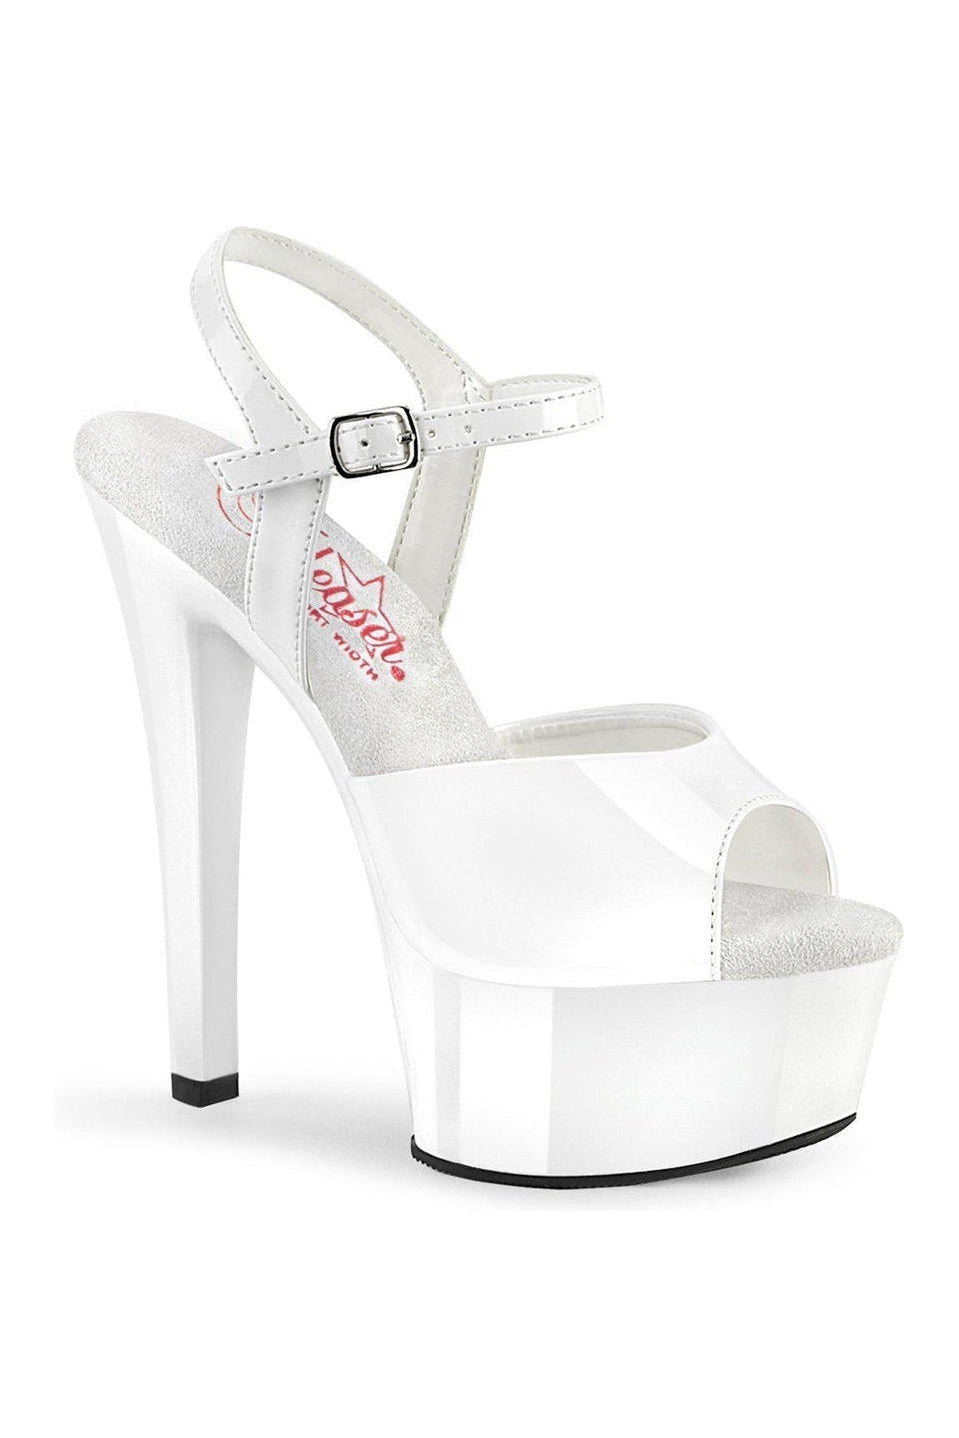 GLEAM-609 Sandal | White Patent-Sandals-Pleaser-White-5-Patent-SEXYSHOES.COM